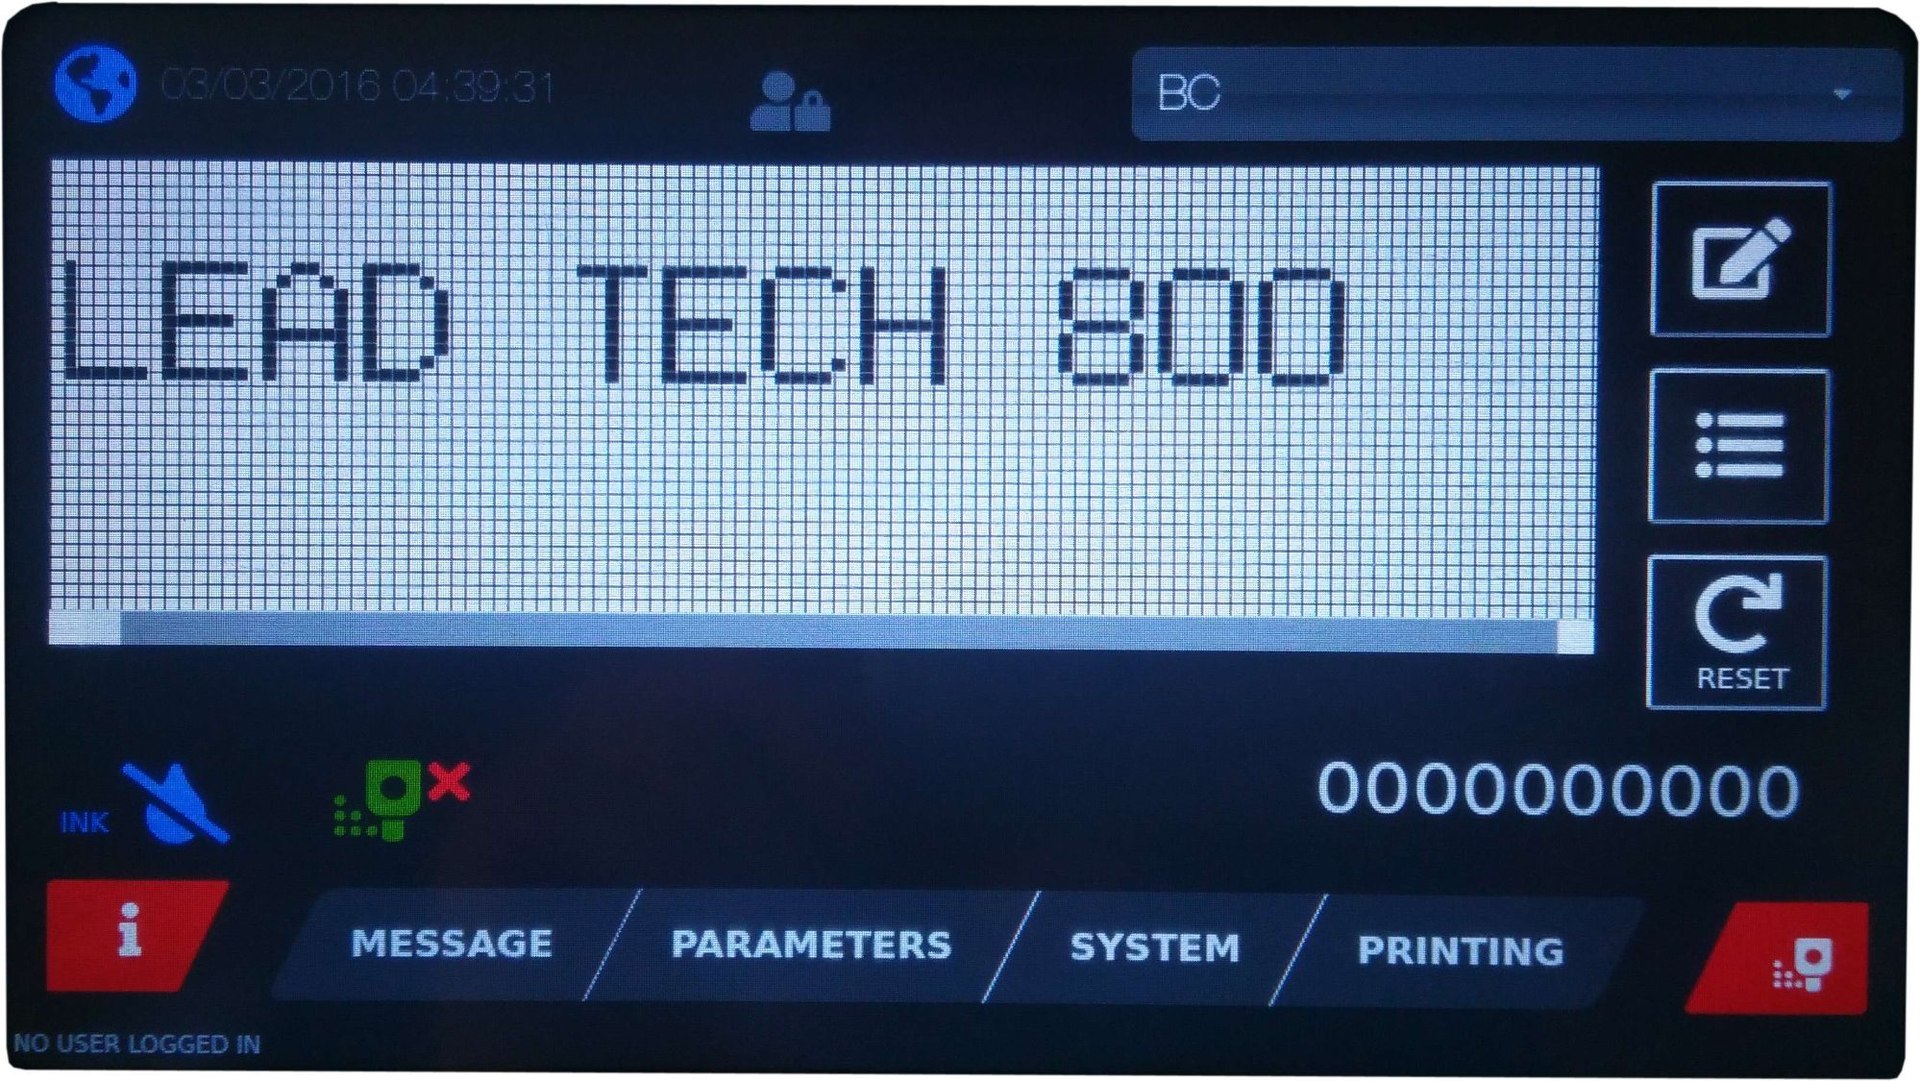 Lead Tech Lt800 Moving Head Printing Cij Inkjet Printer